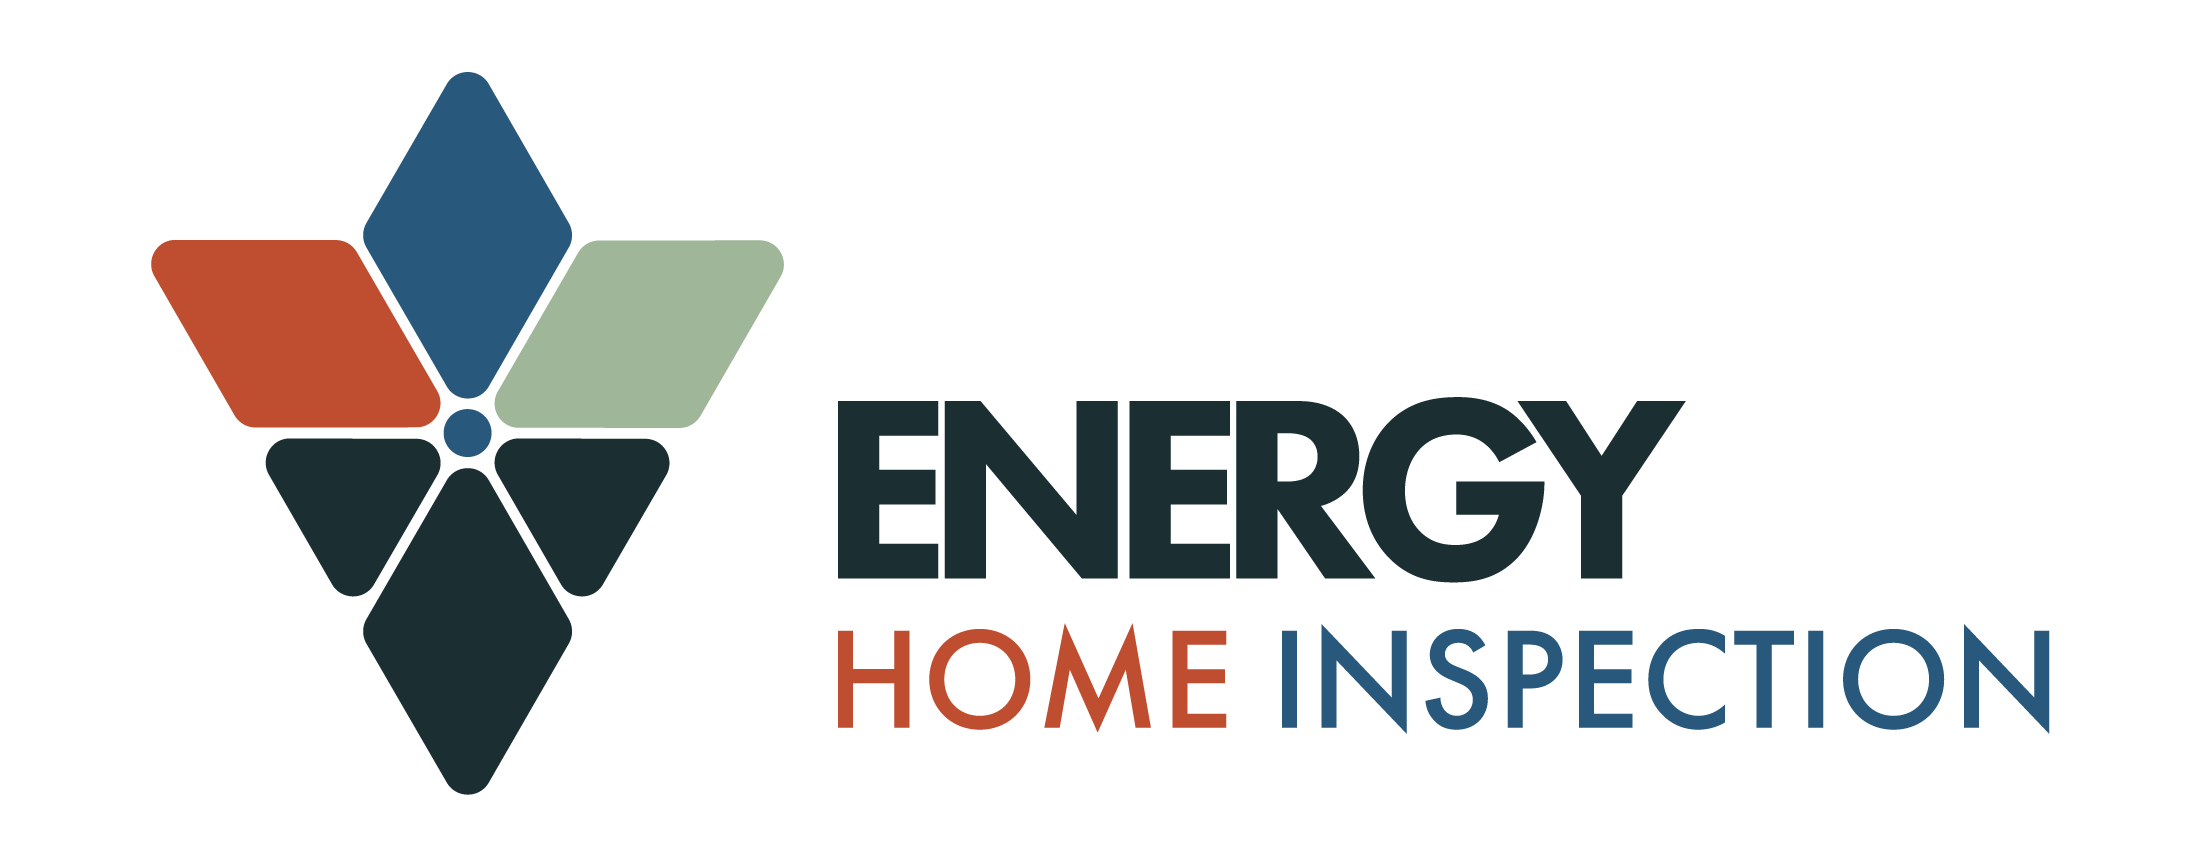 Energy Home Inspection logo